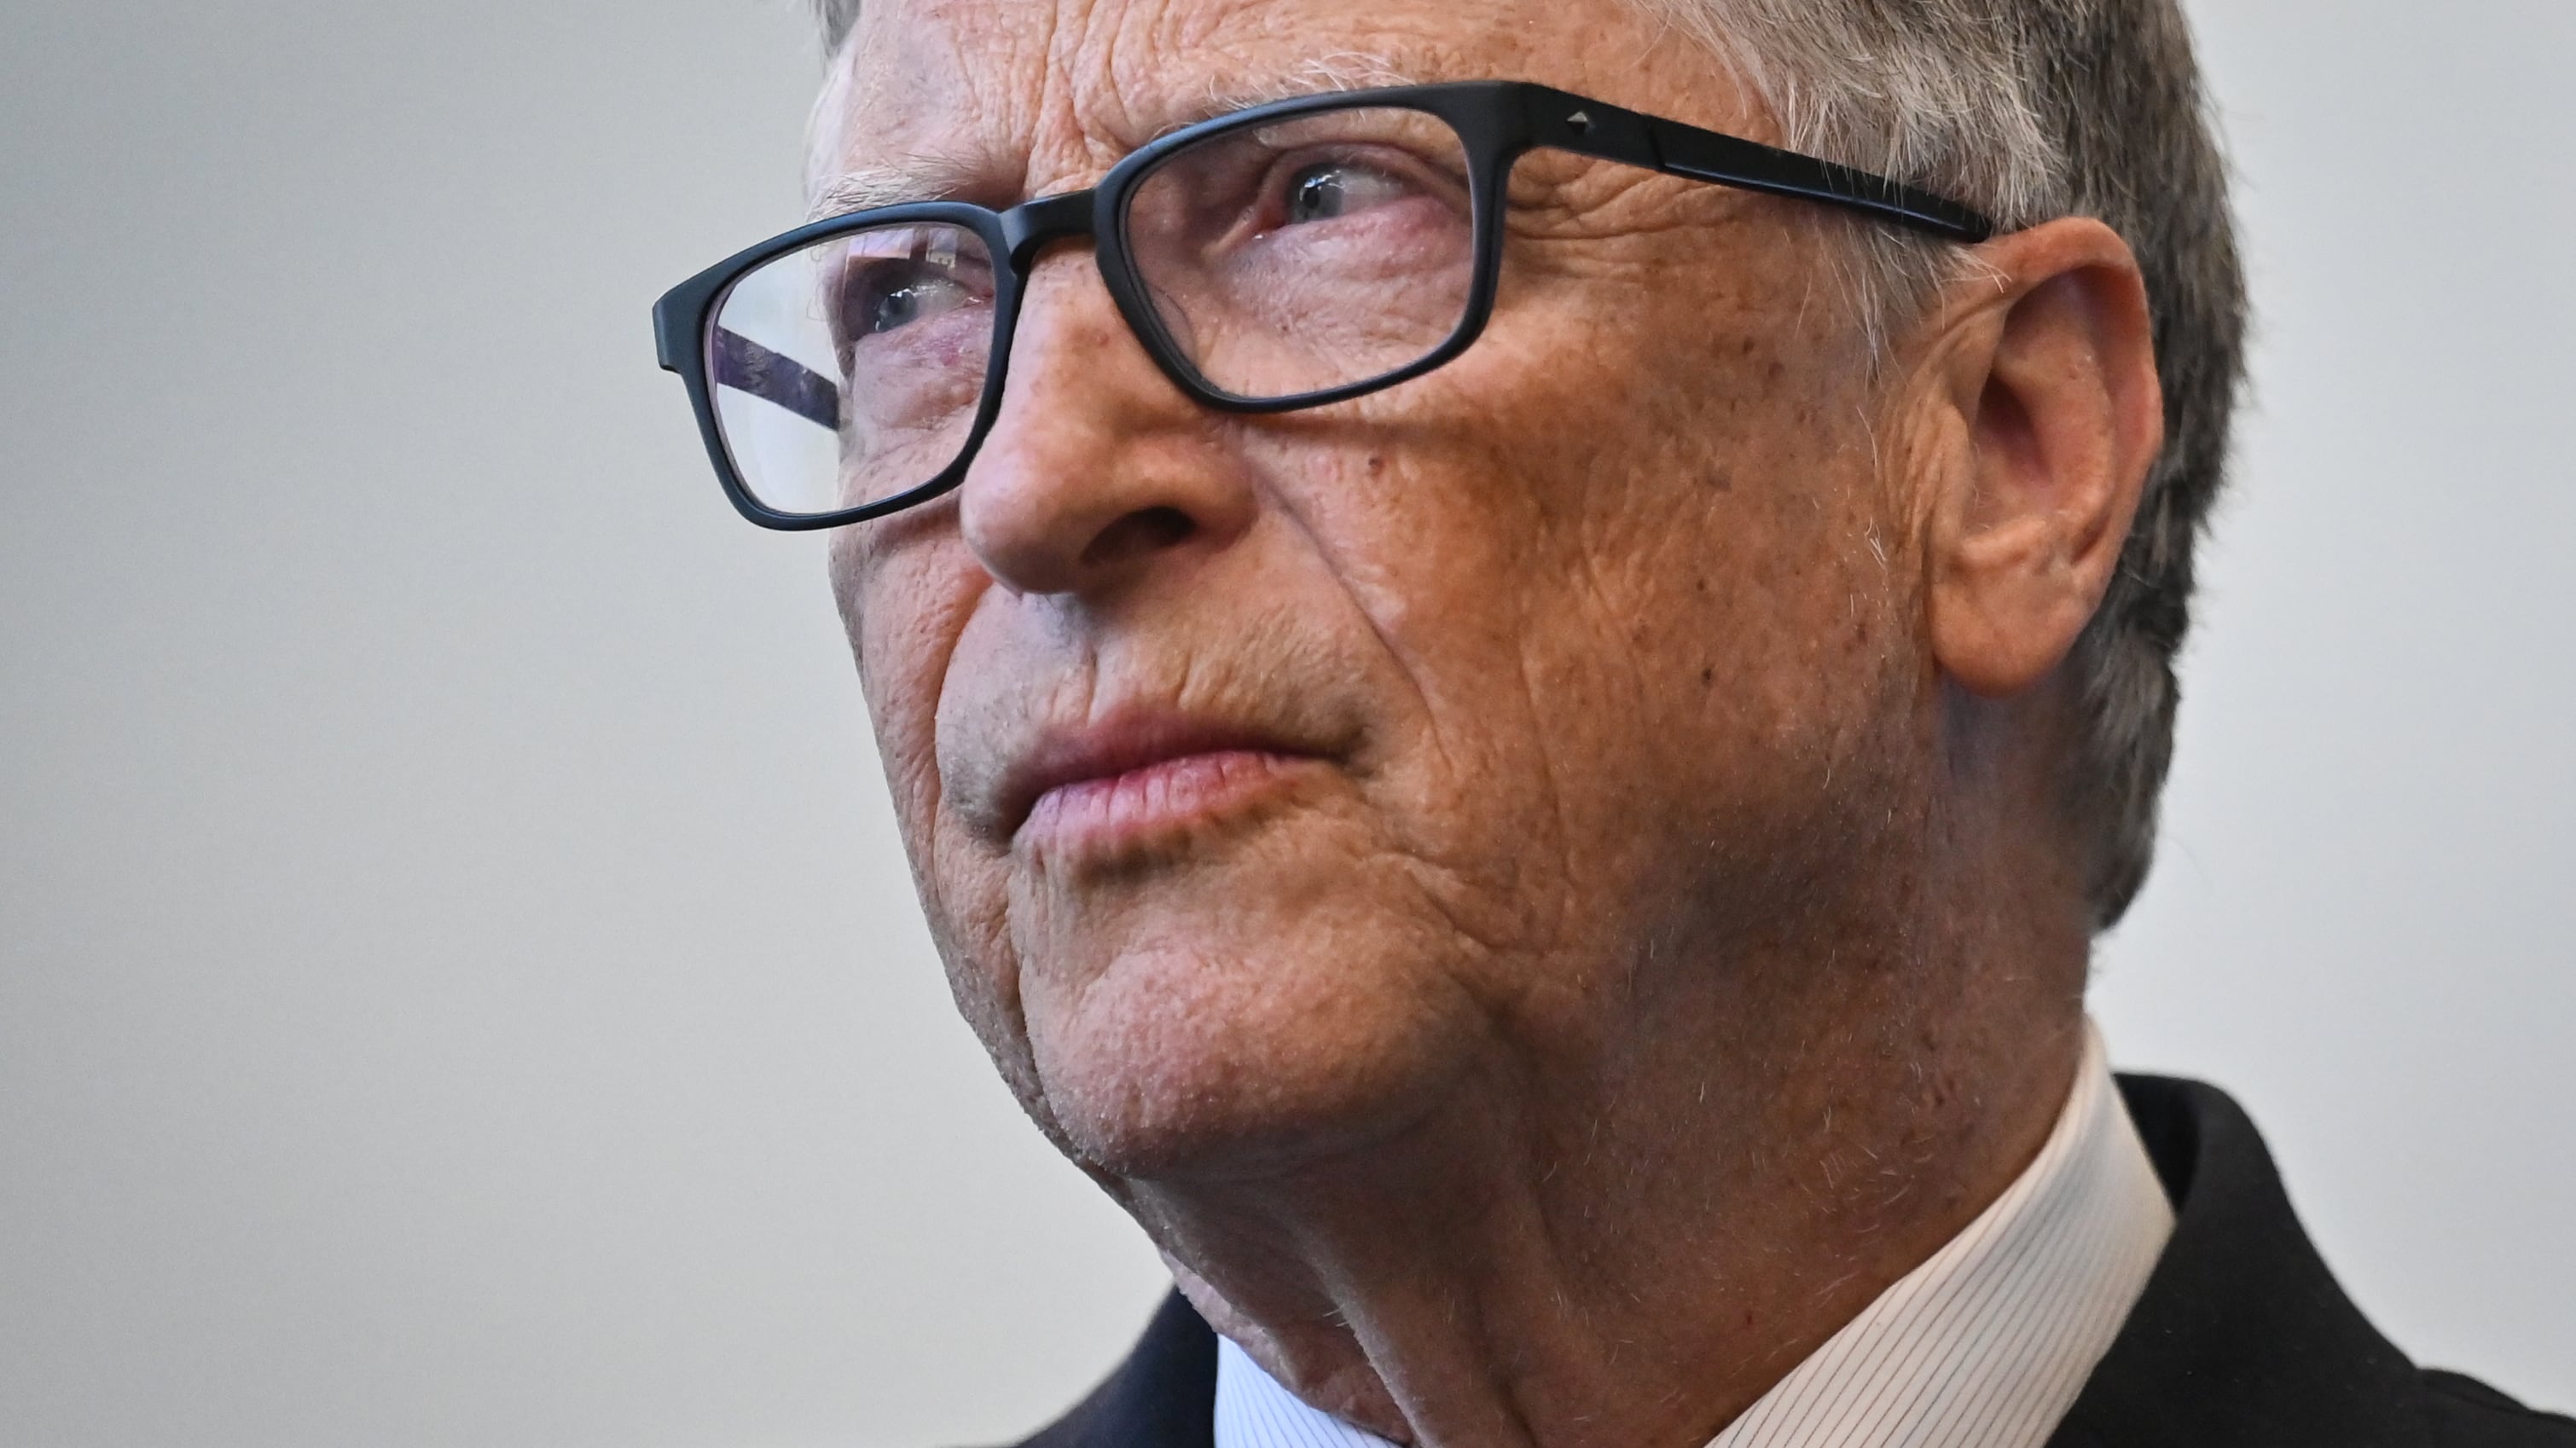 Billionaire philanthropist and Microsoft founder Bill Gates